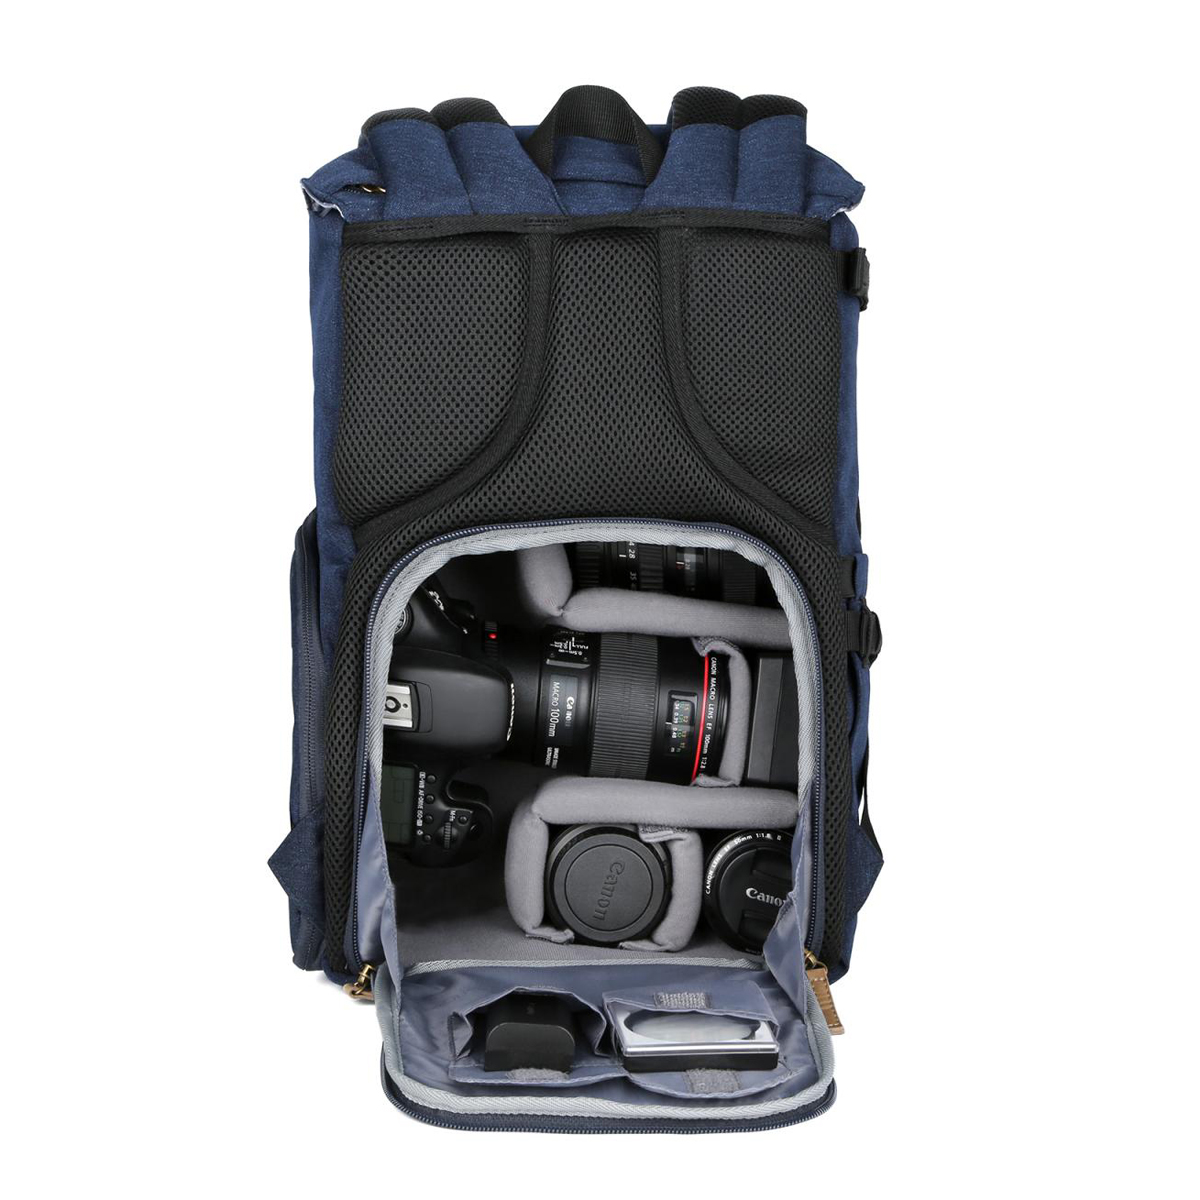 K&F Concept Lens Cases Soft Neoprene Pouch (L)